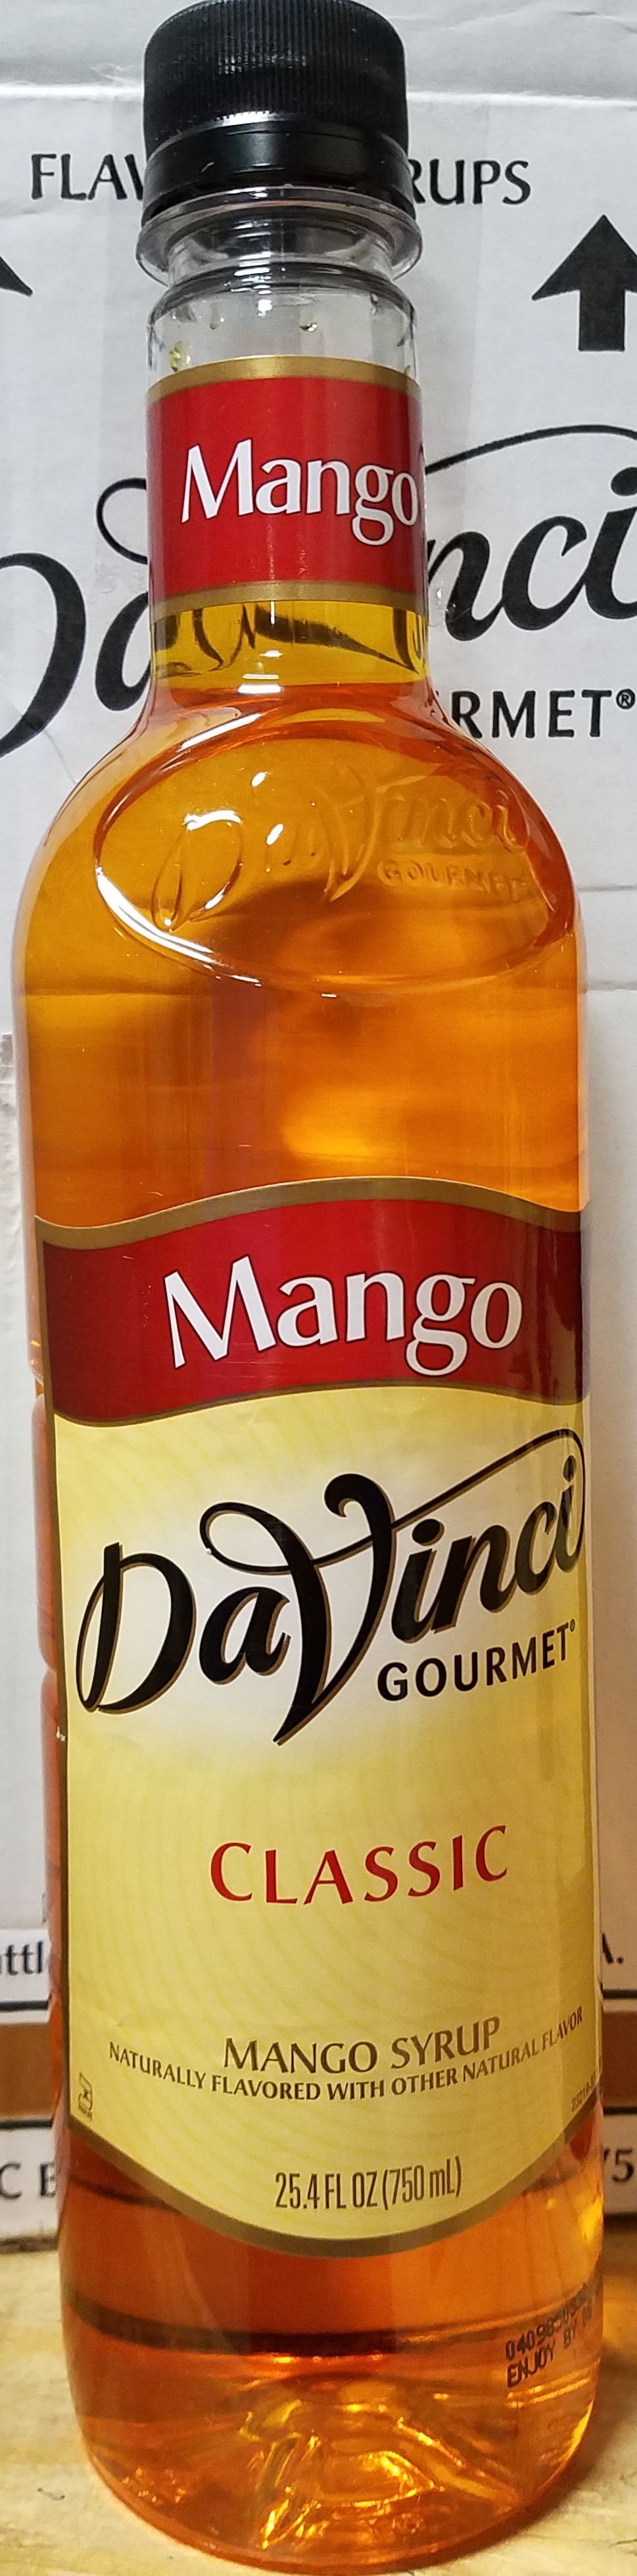 DaVinci Mango 4/750ml - Sold by EA